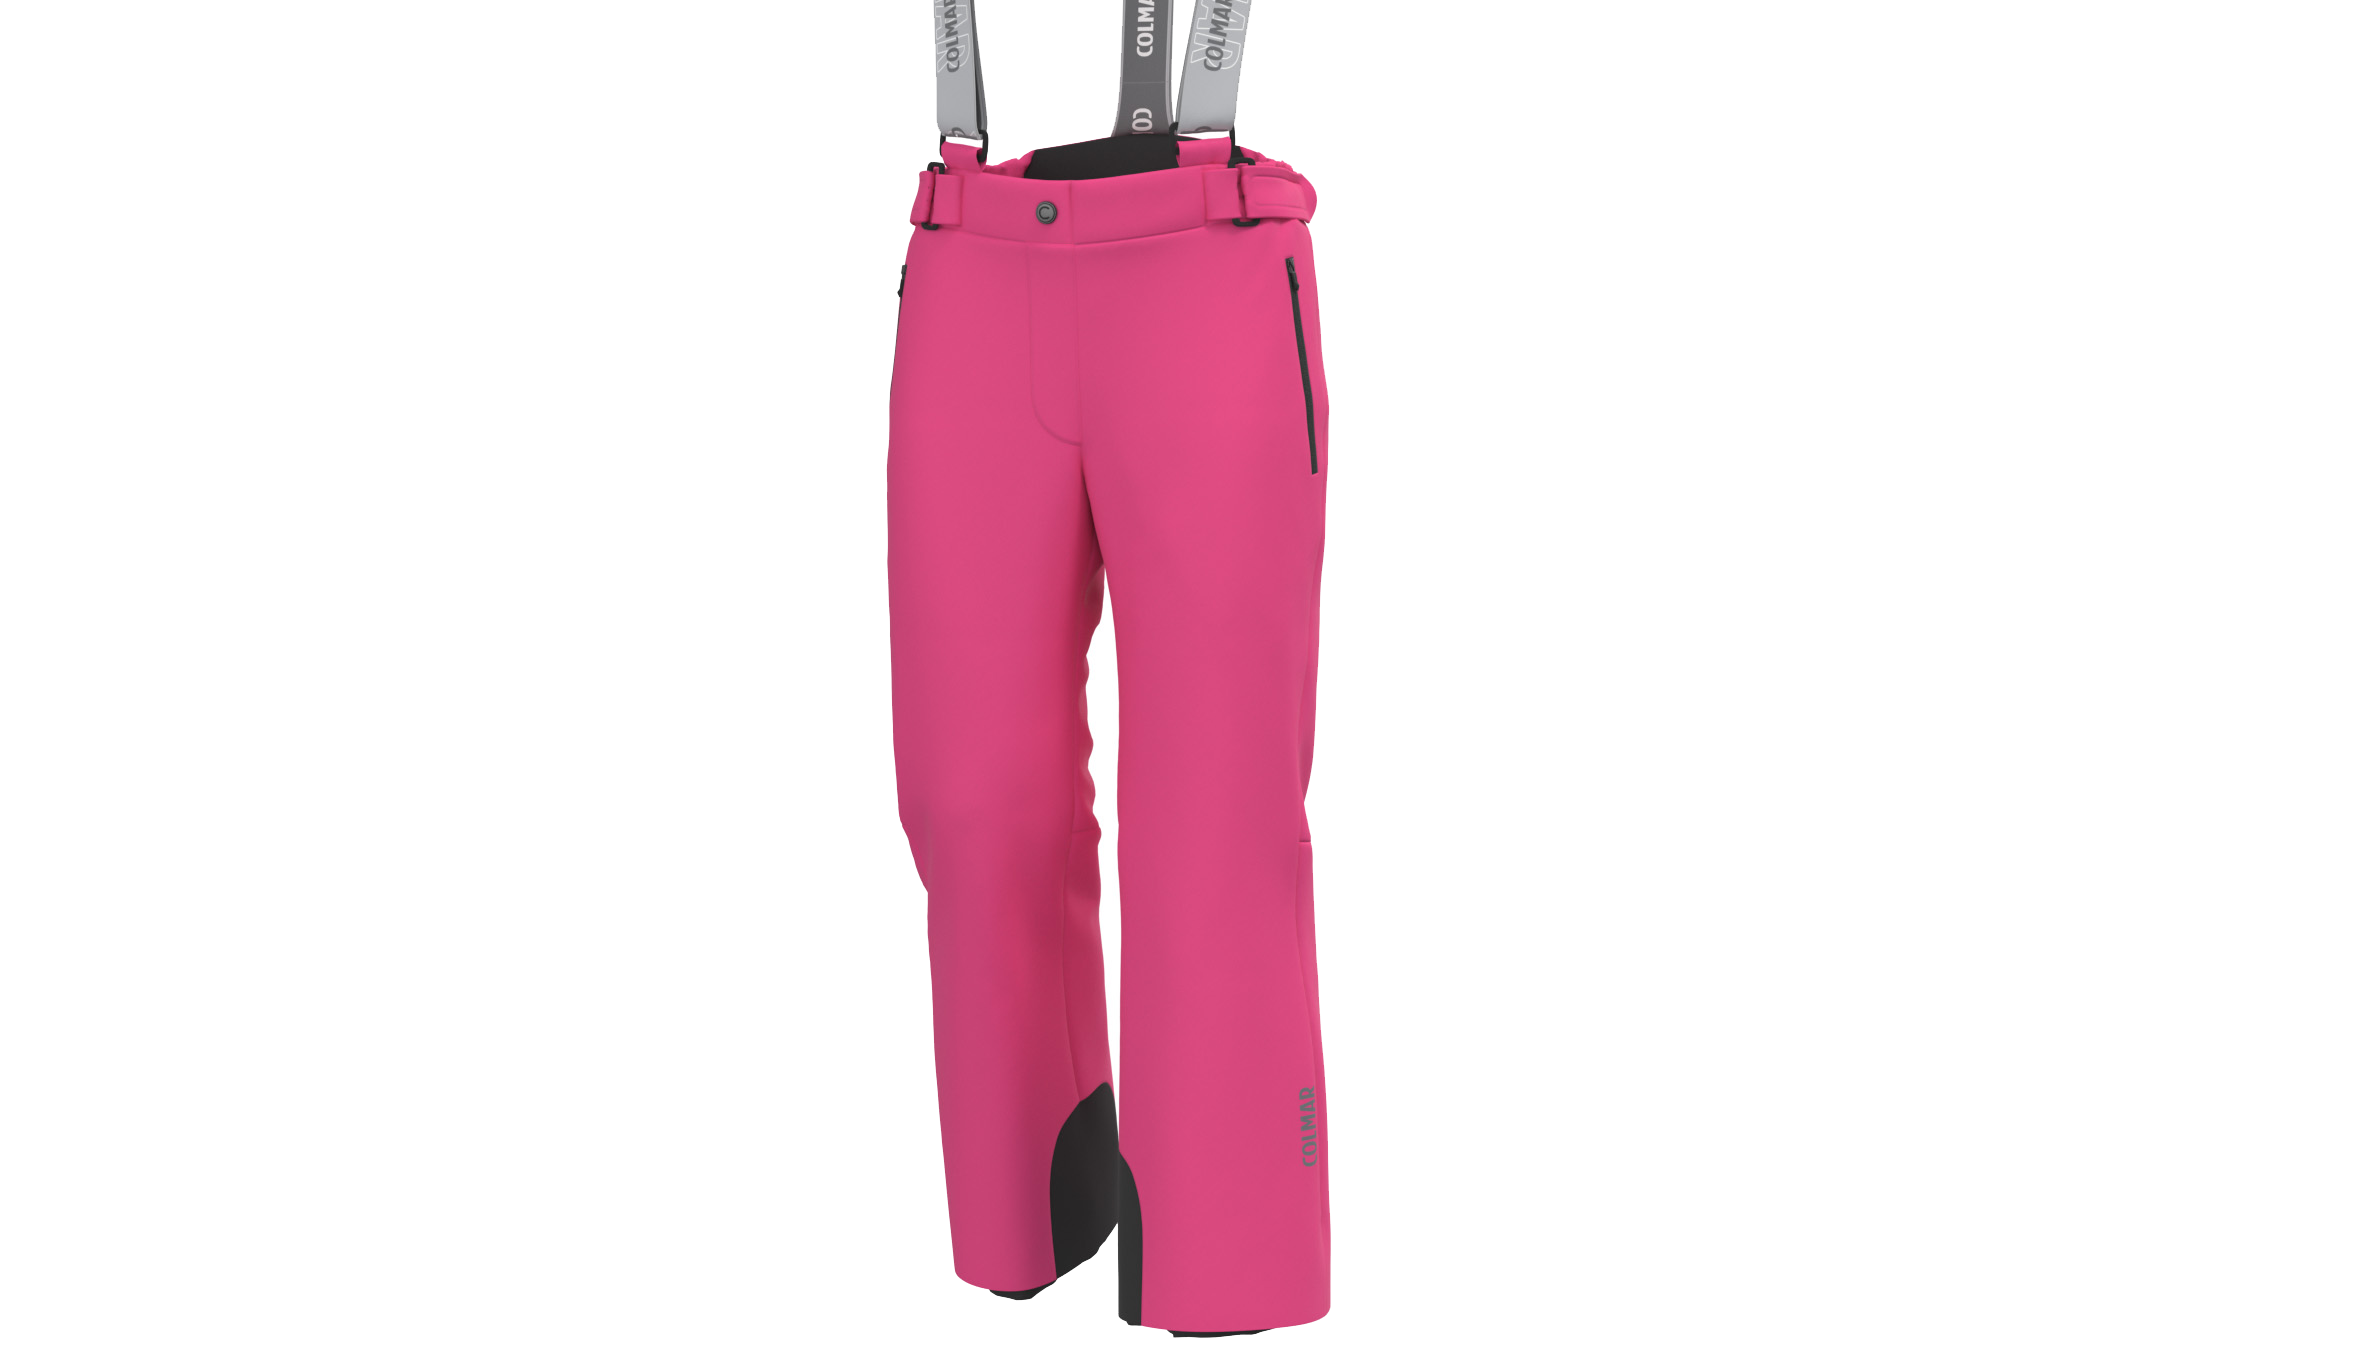 Pantaloni de schi Colmar Copii Padded Roz Fete 3219B-437